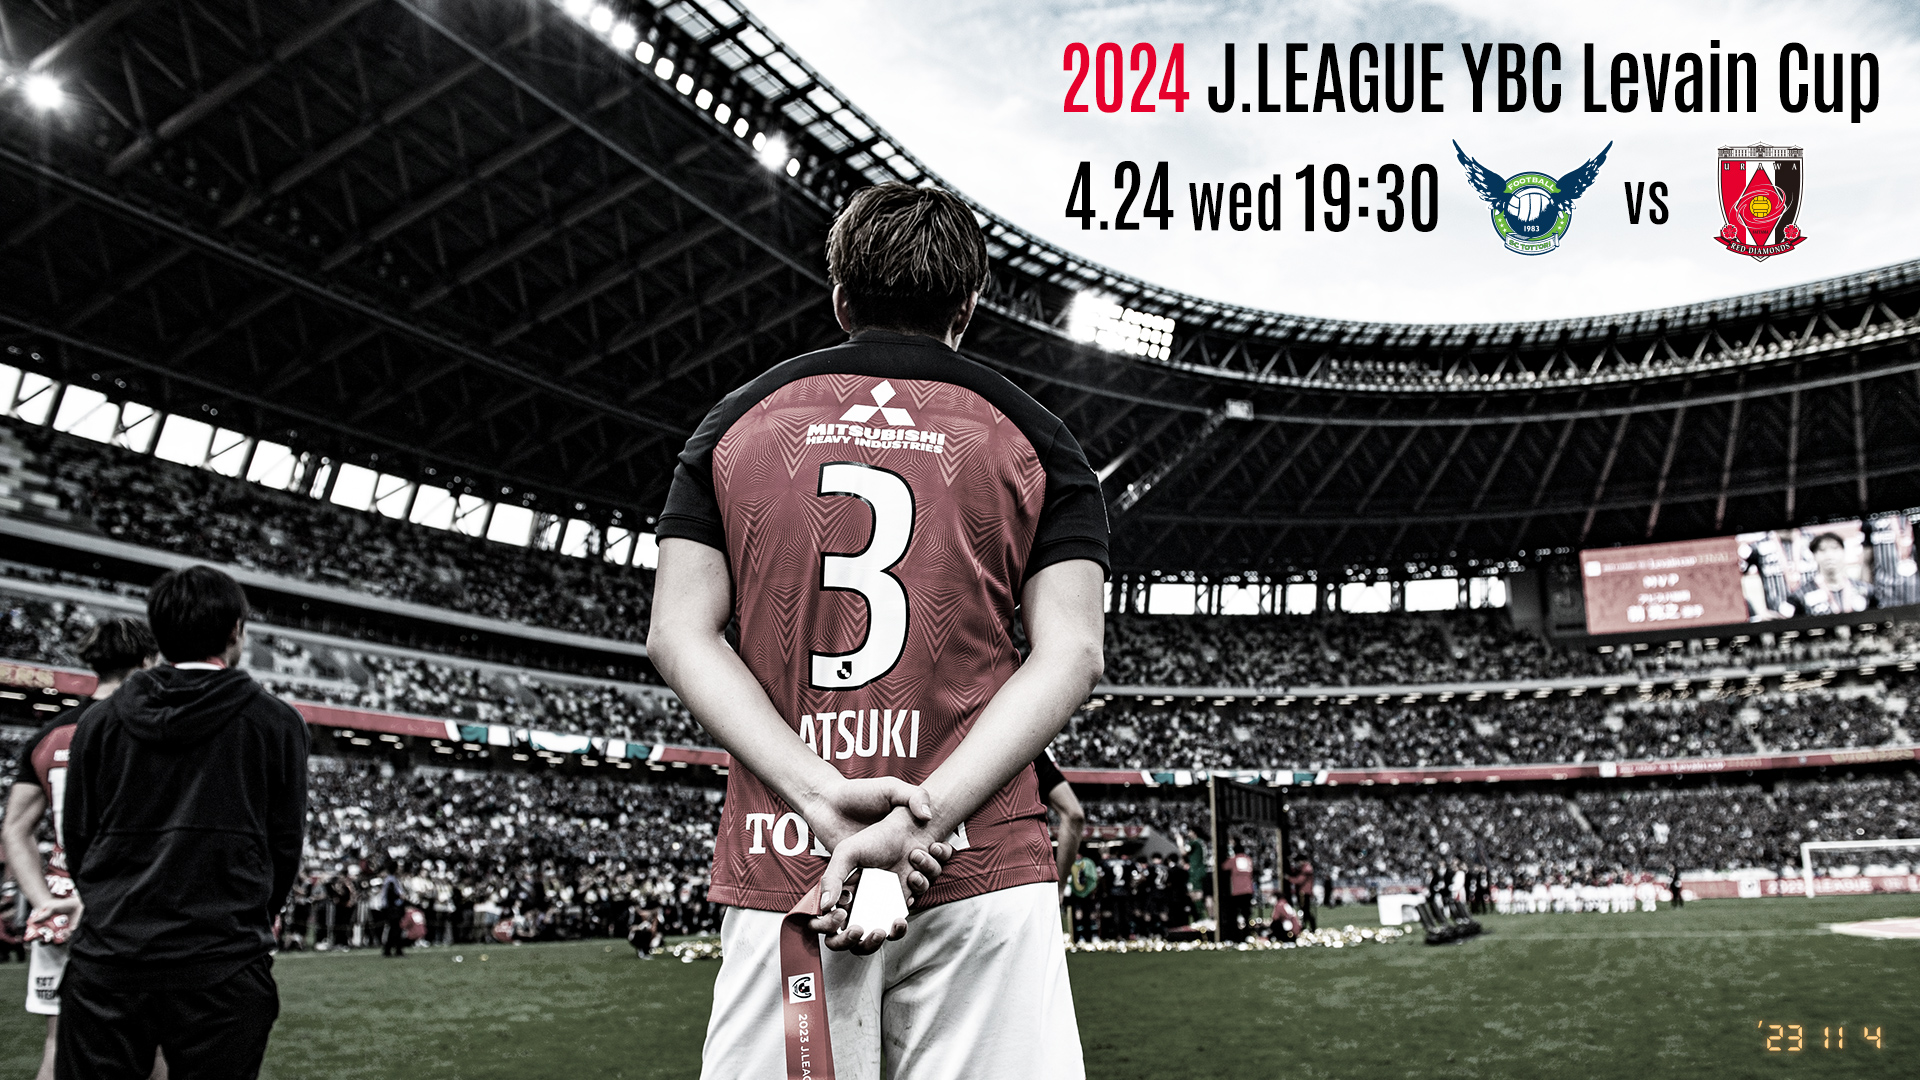 2024 J.League YBC Levain Cup 1st Round 2nd Round vs. Gainare Tottori Match Information